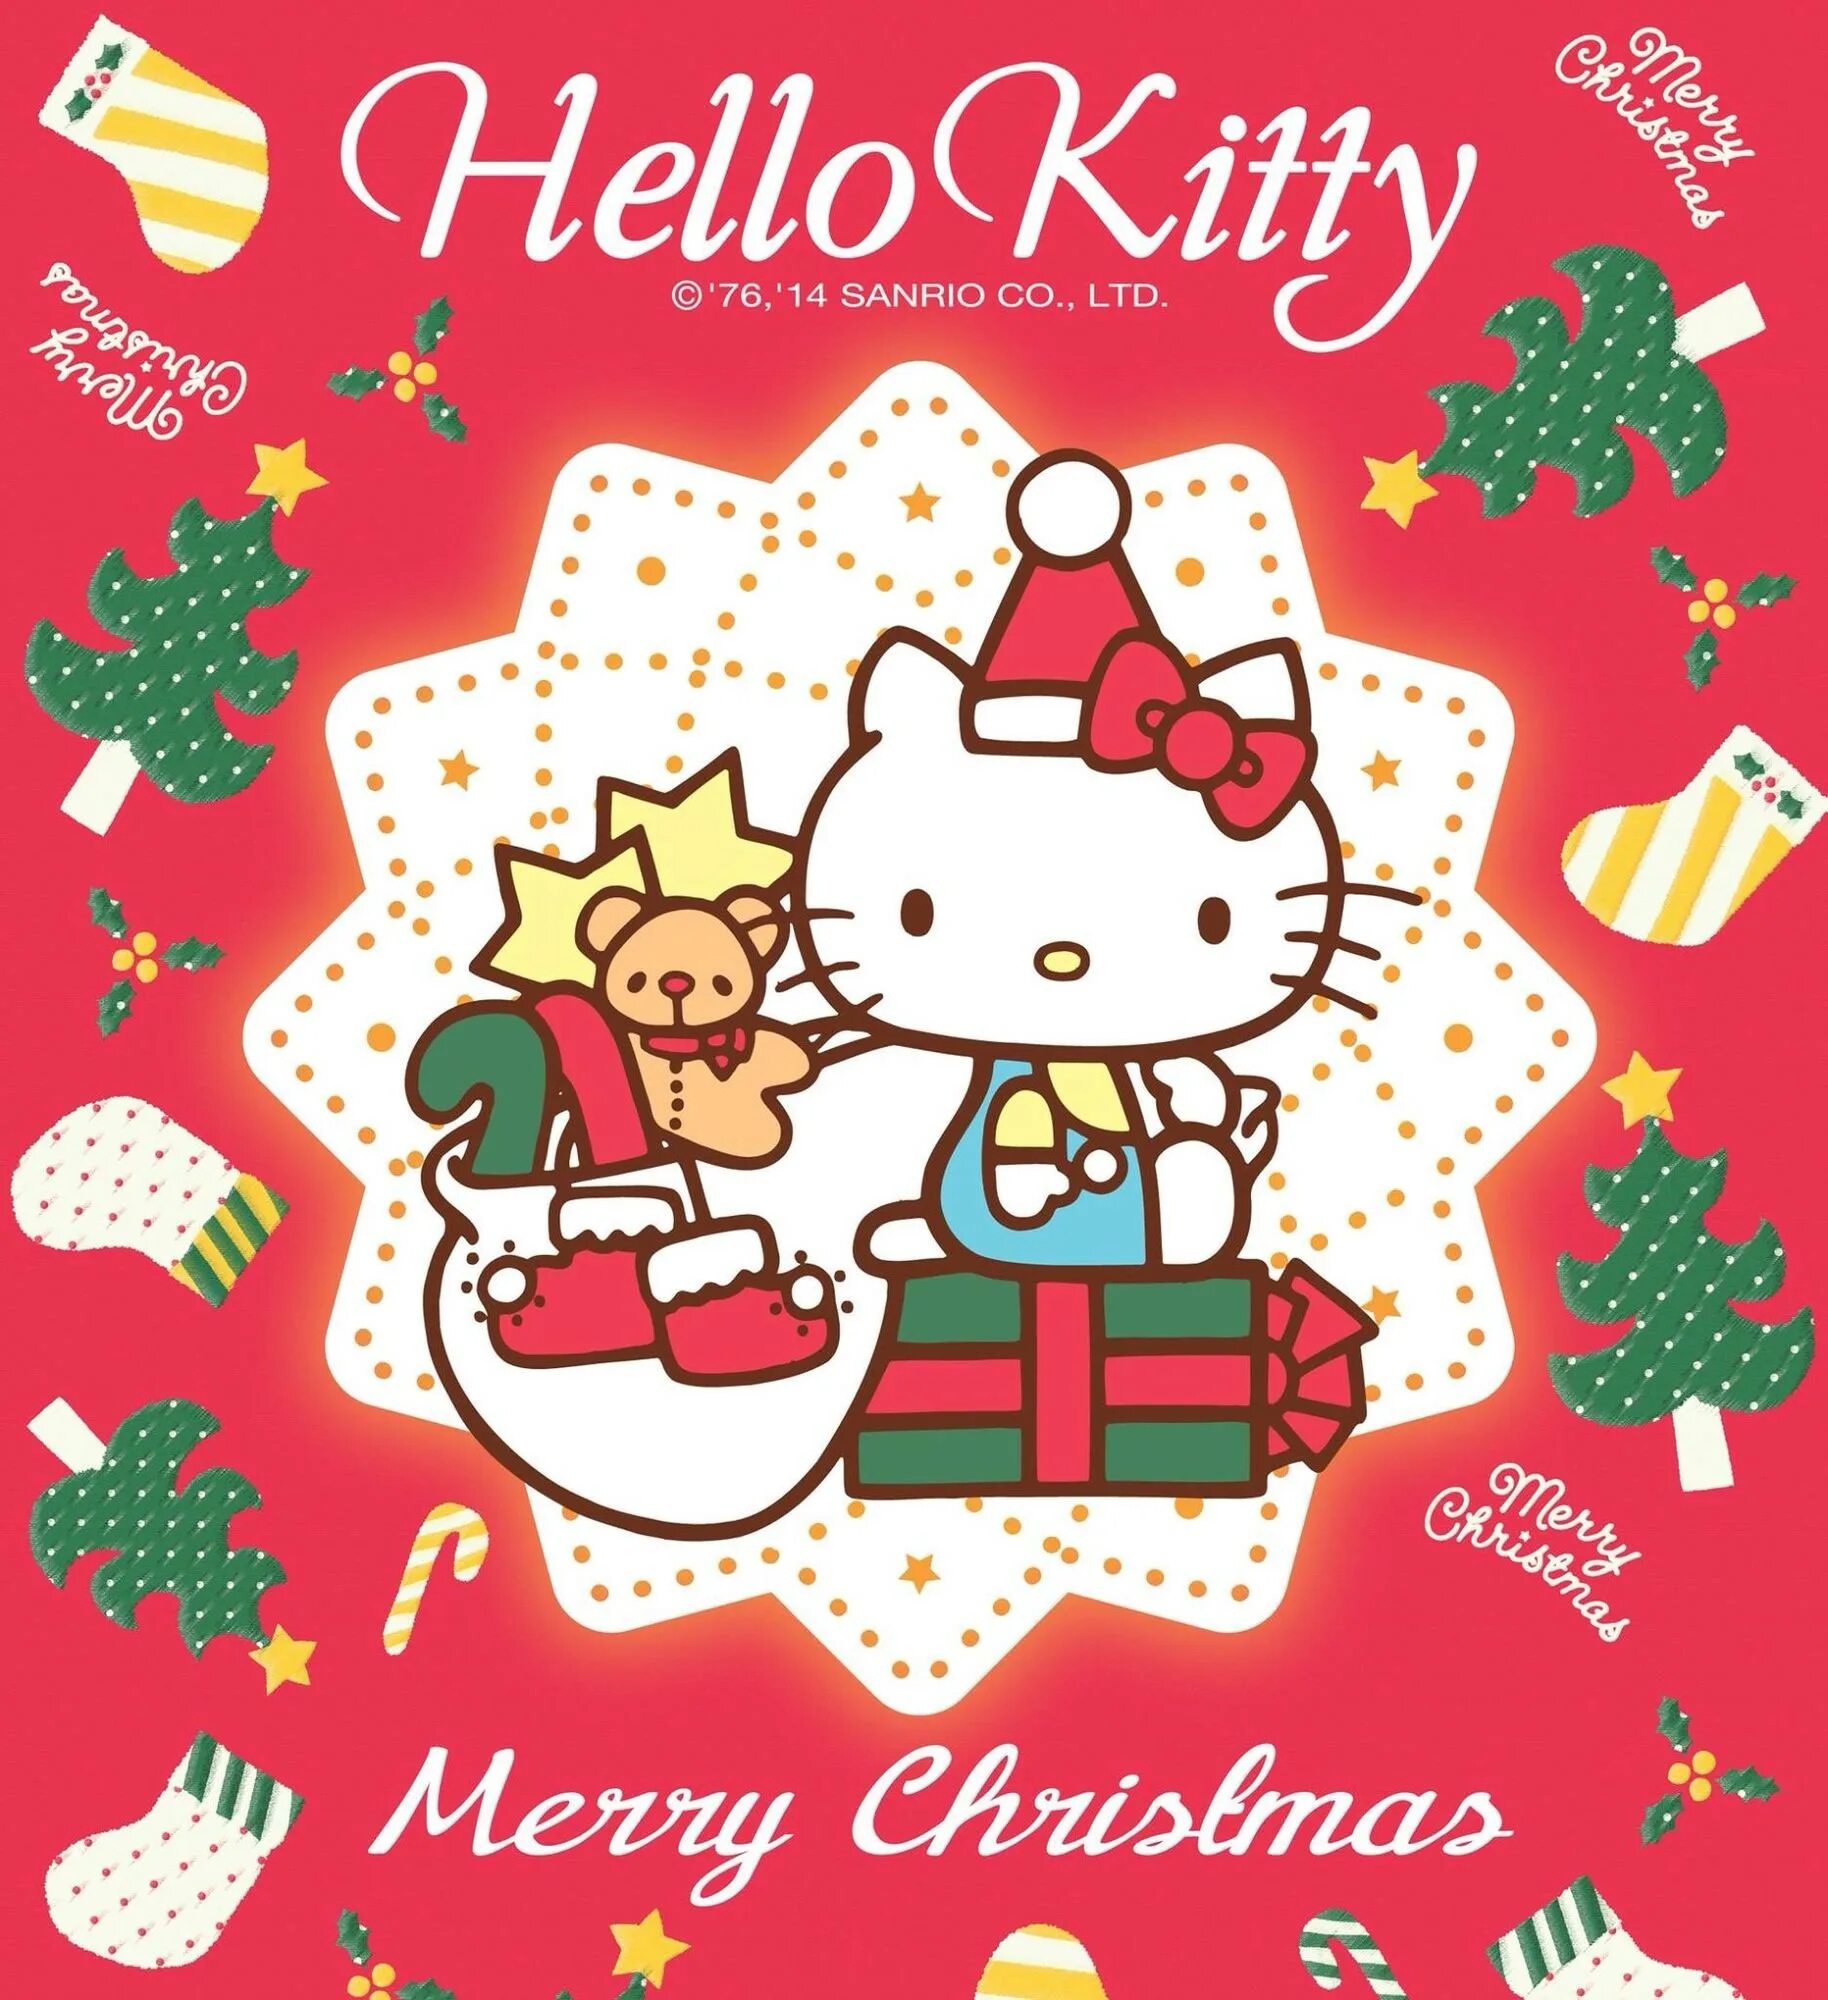 Открытка хеллоу. Новогодние открытки с hello Kitty. Новогодняя открытка с Хеллоу Китти. Открытки на новый год Хеллоу Кити. Открытка на НГ hello Kitty.